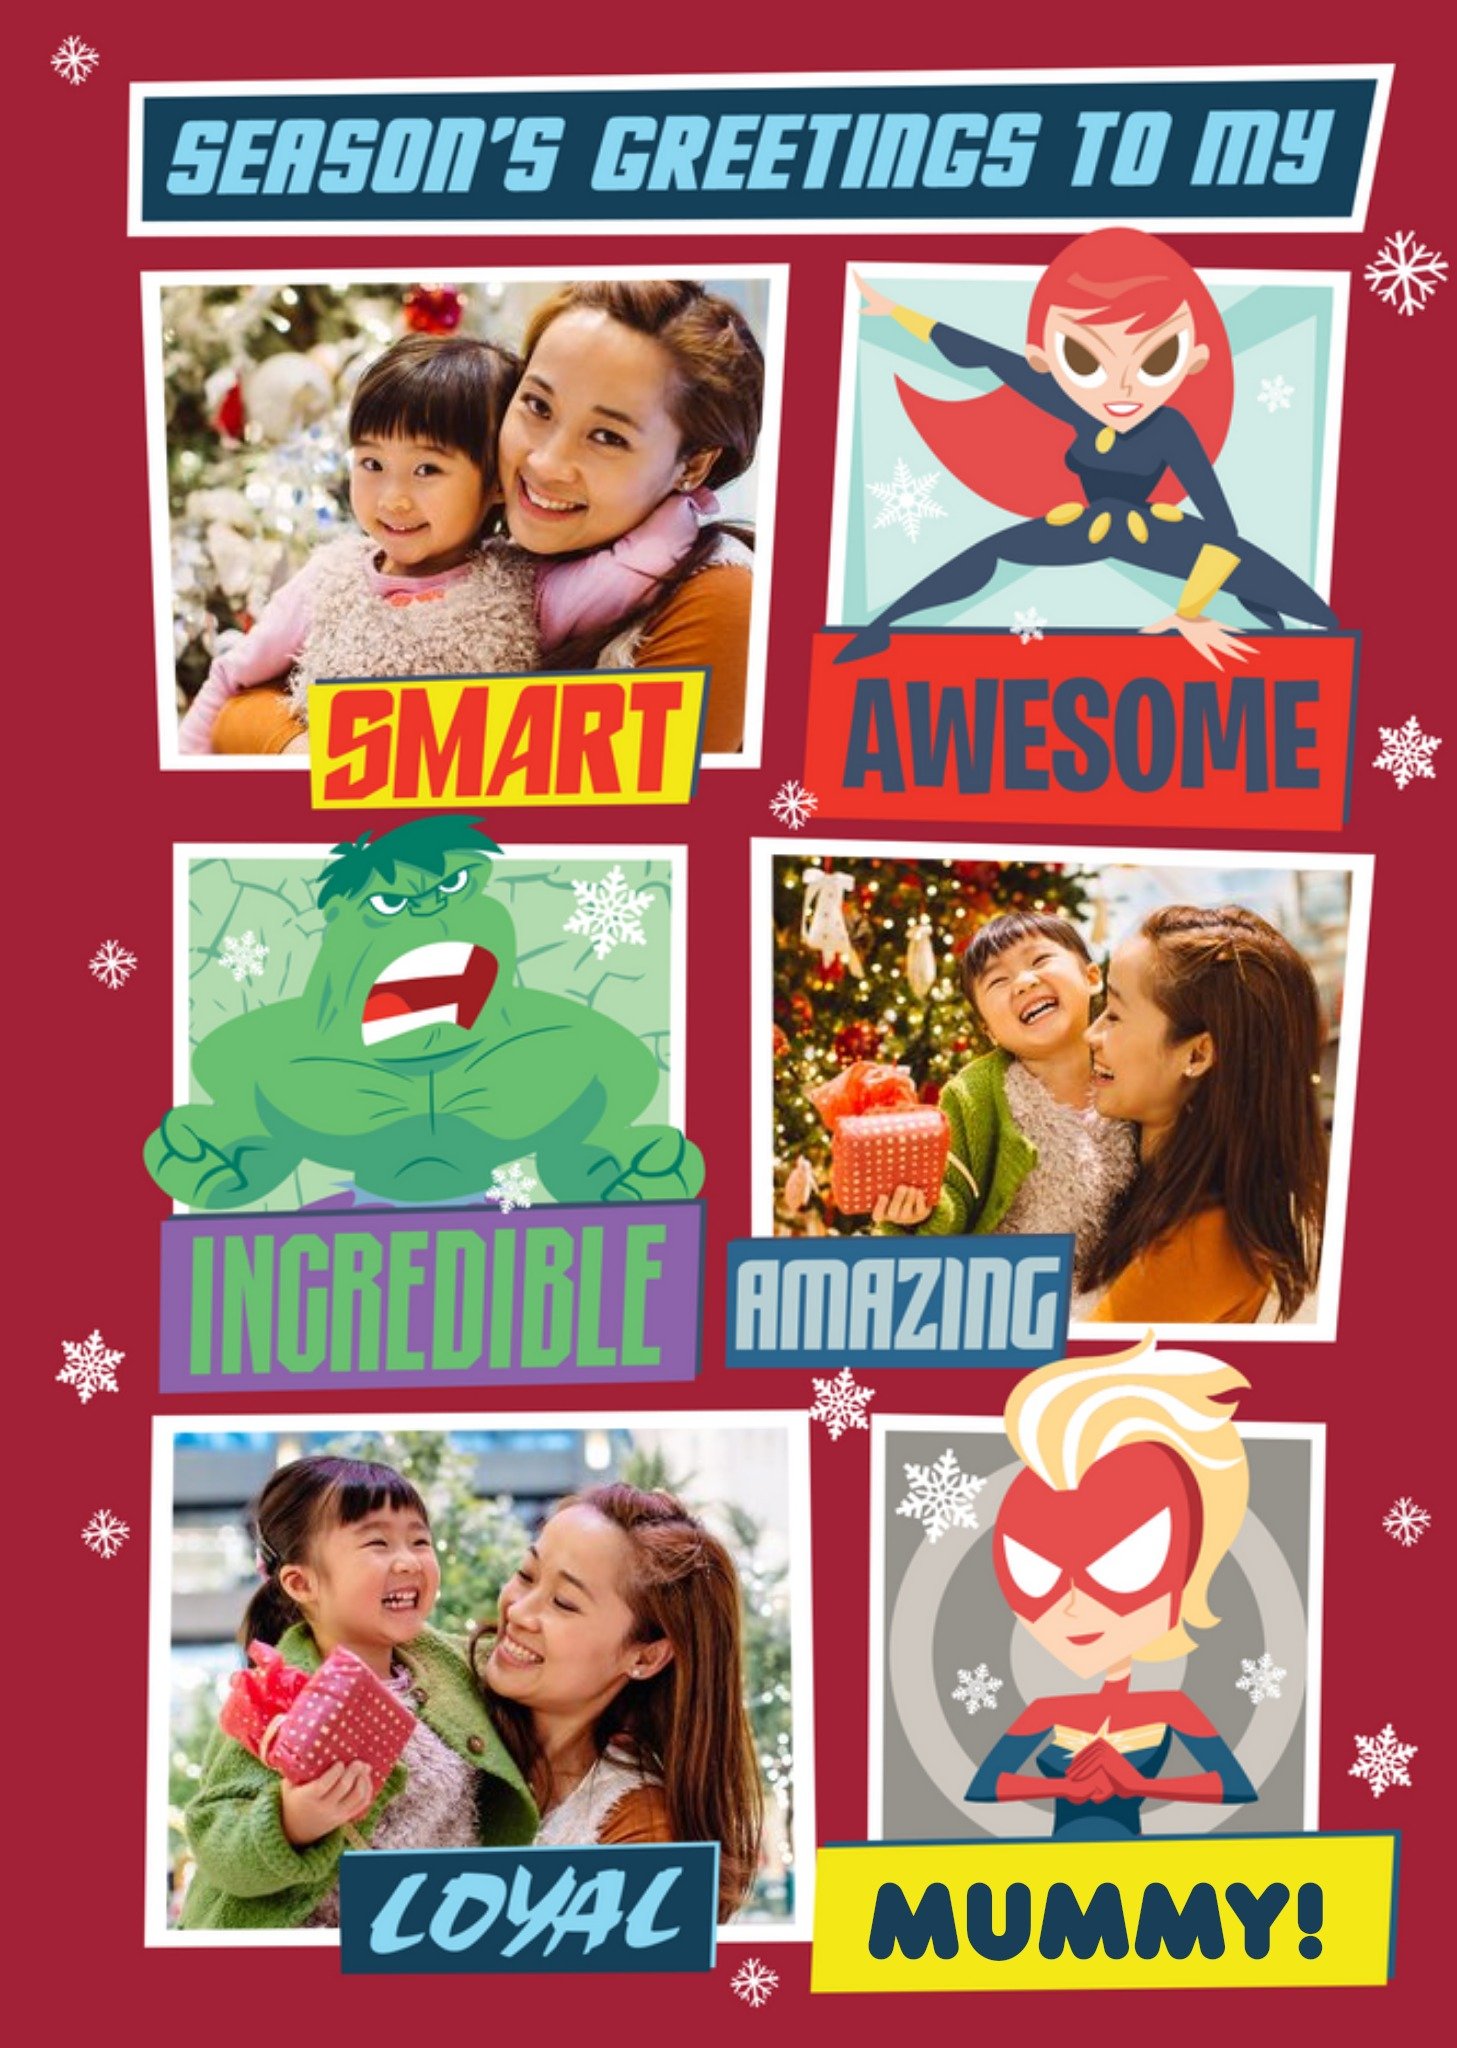 Marvel Comics Avengers Mummy Photo Upload Christmas Card Ecard